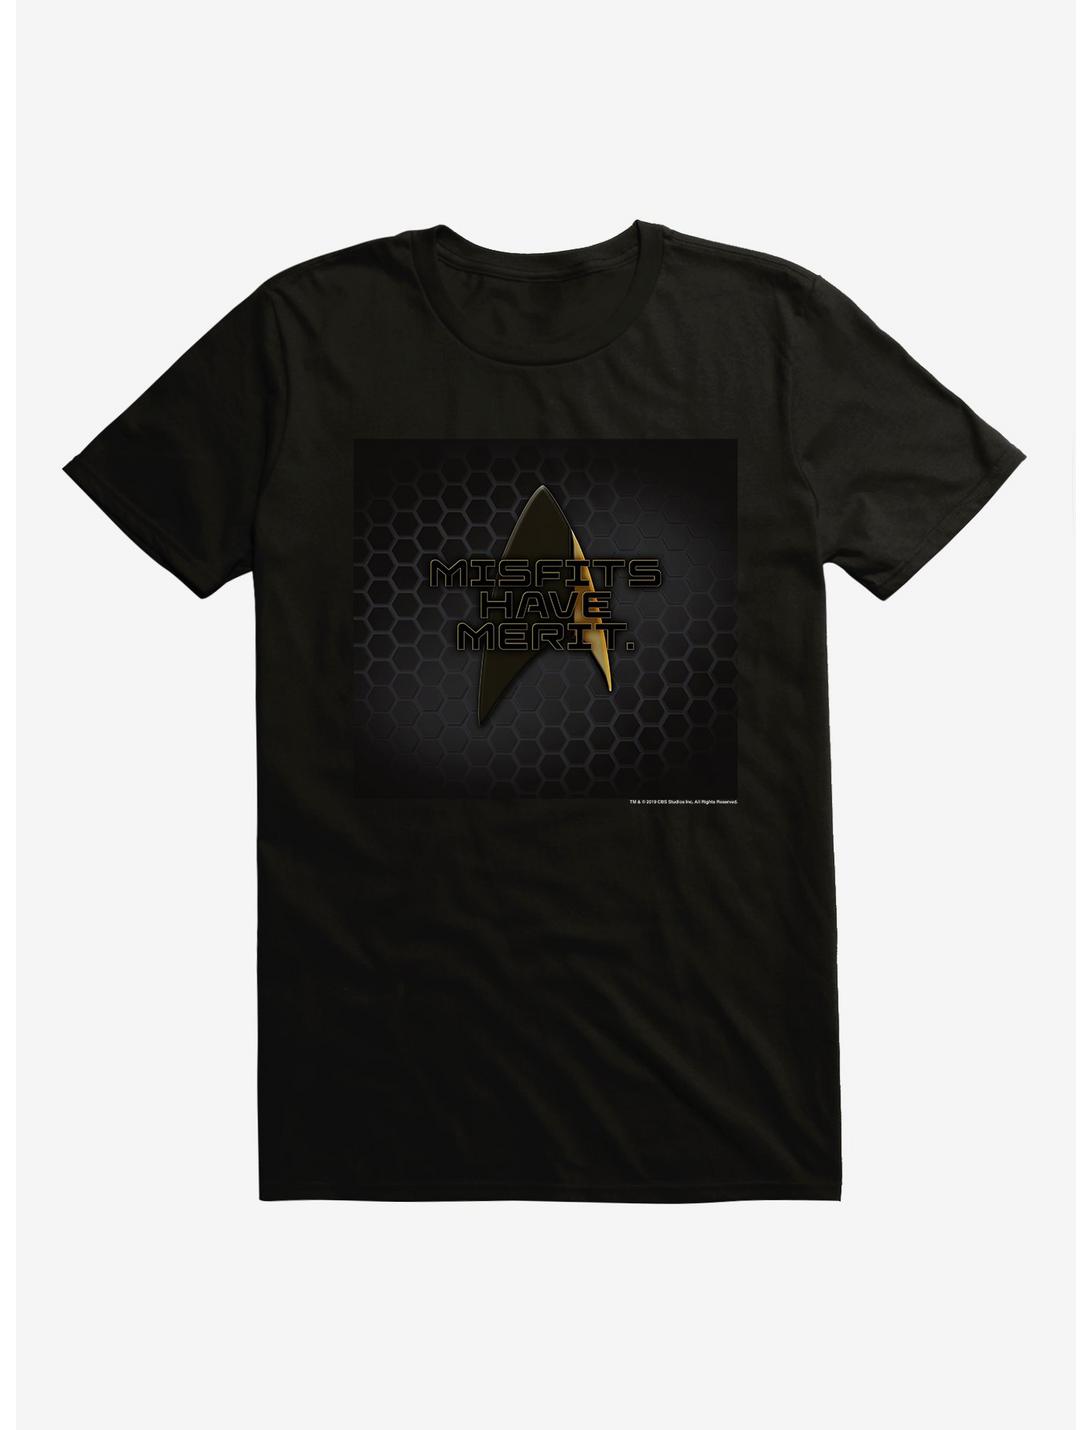 Star Trek Misfits Have Merit T-Shirt, BLACK, hi-res